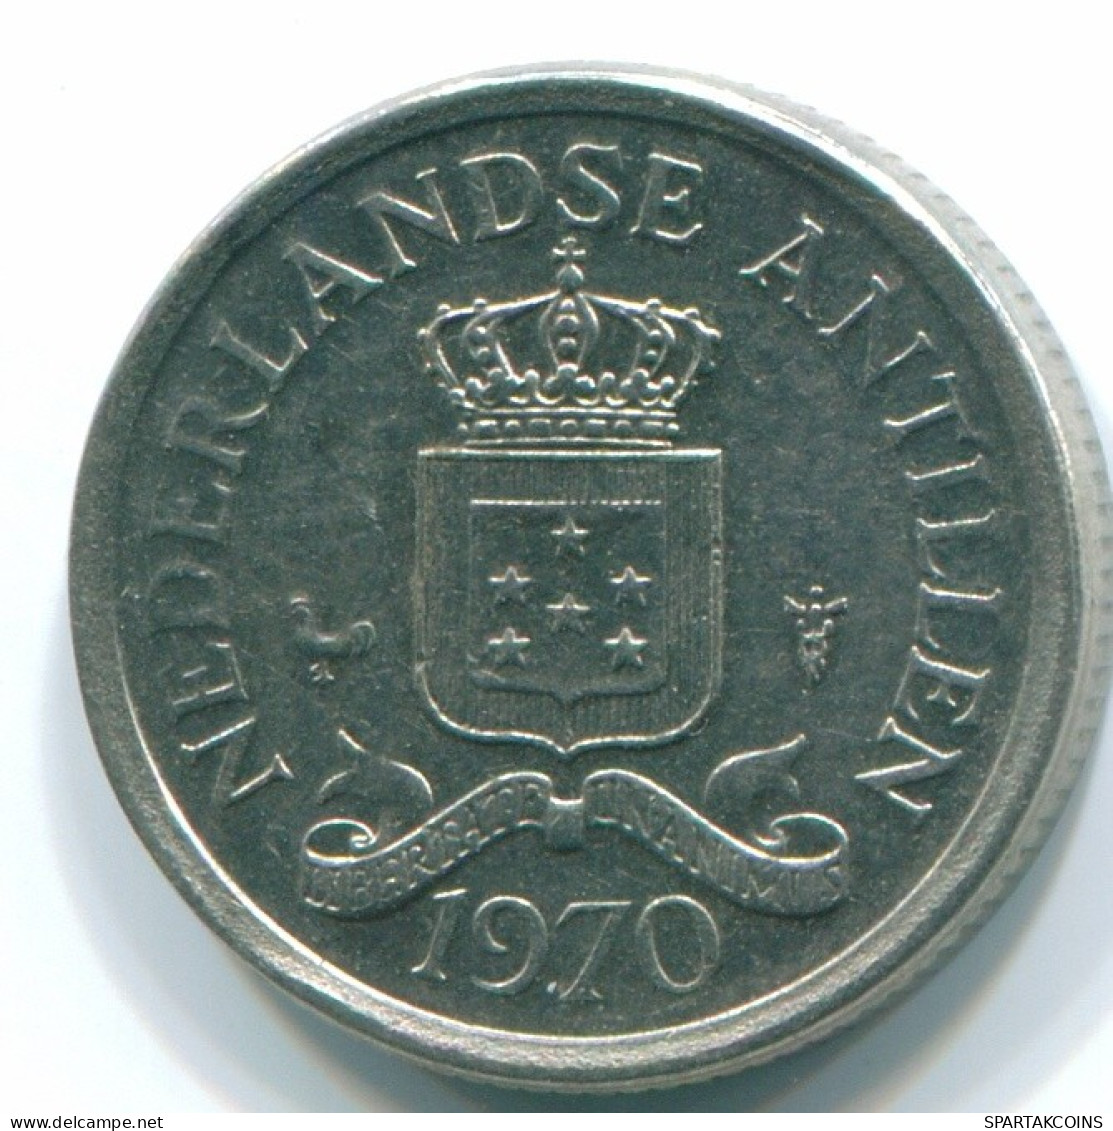 10 CENTS 1970 NIEDERLÄNDISCHE ANTILLEN Nickel Koloniale Münze #S13373.D.A - Netherlands Antilles